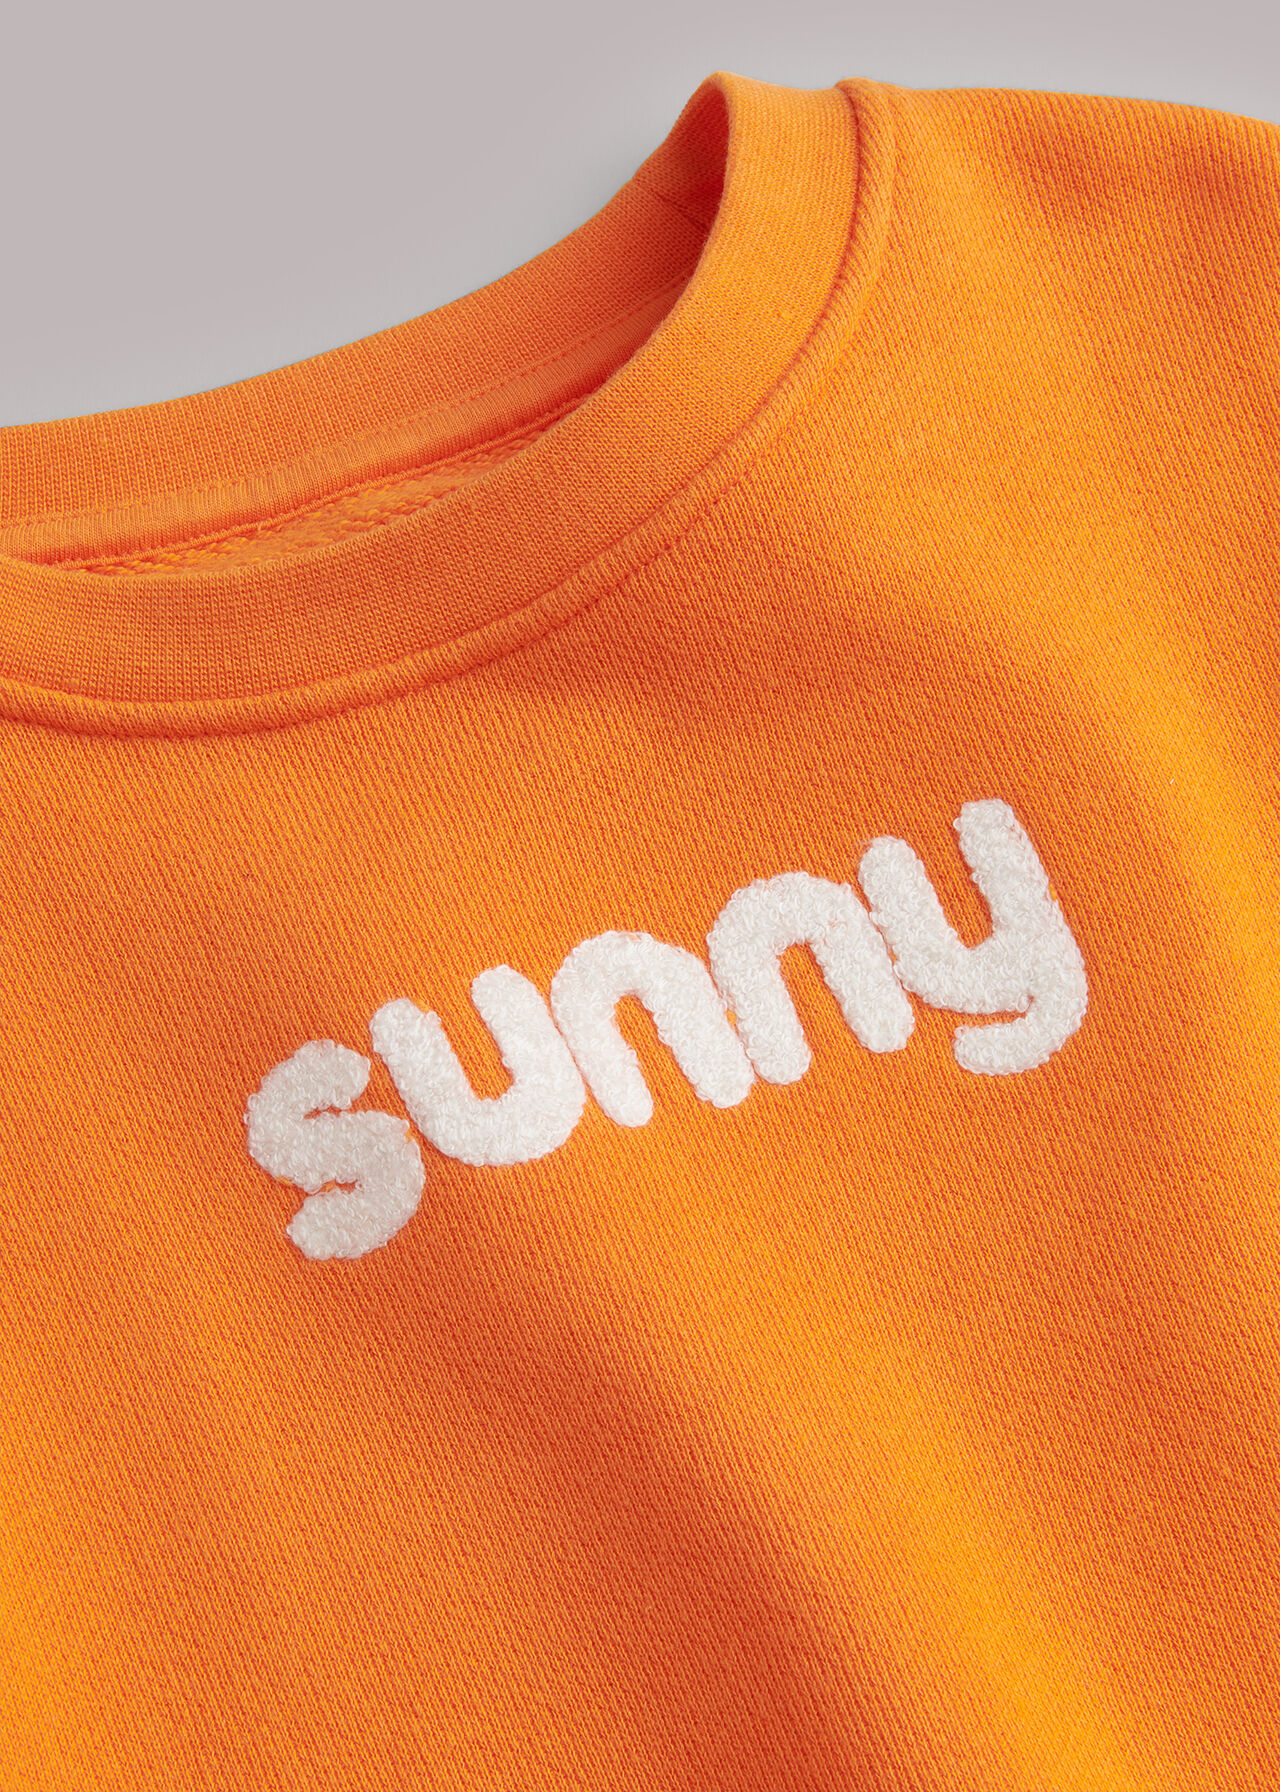 Sunny Sweatshirt